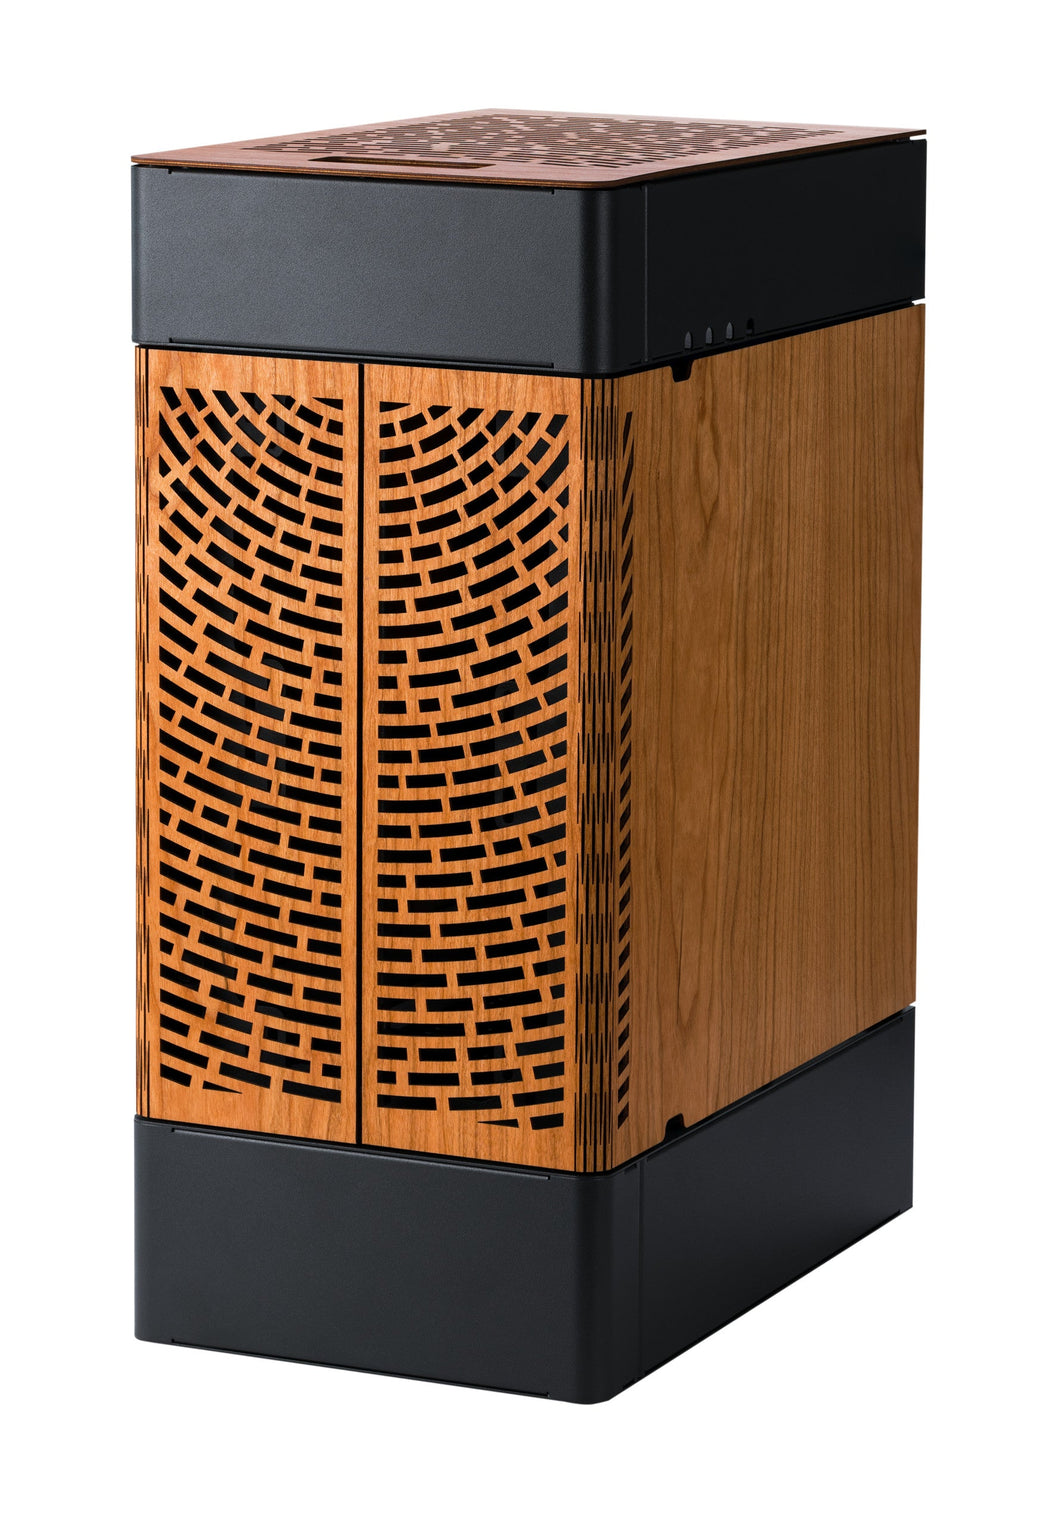 Kanto mATX V1.3 - High-performance wooden PC case